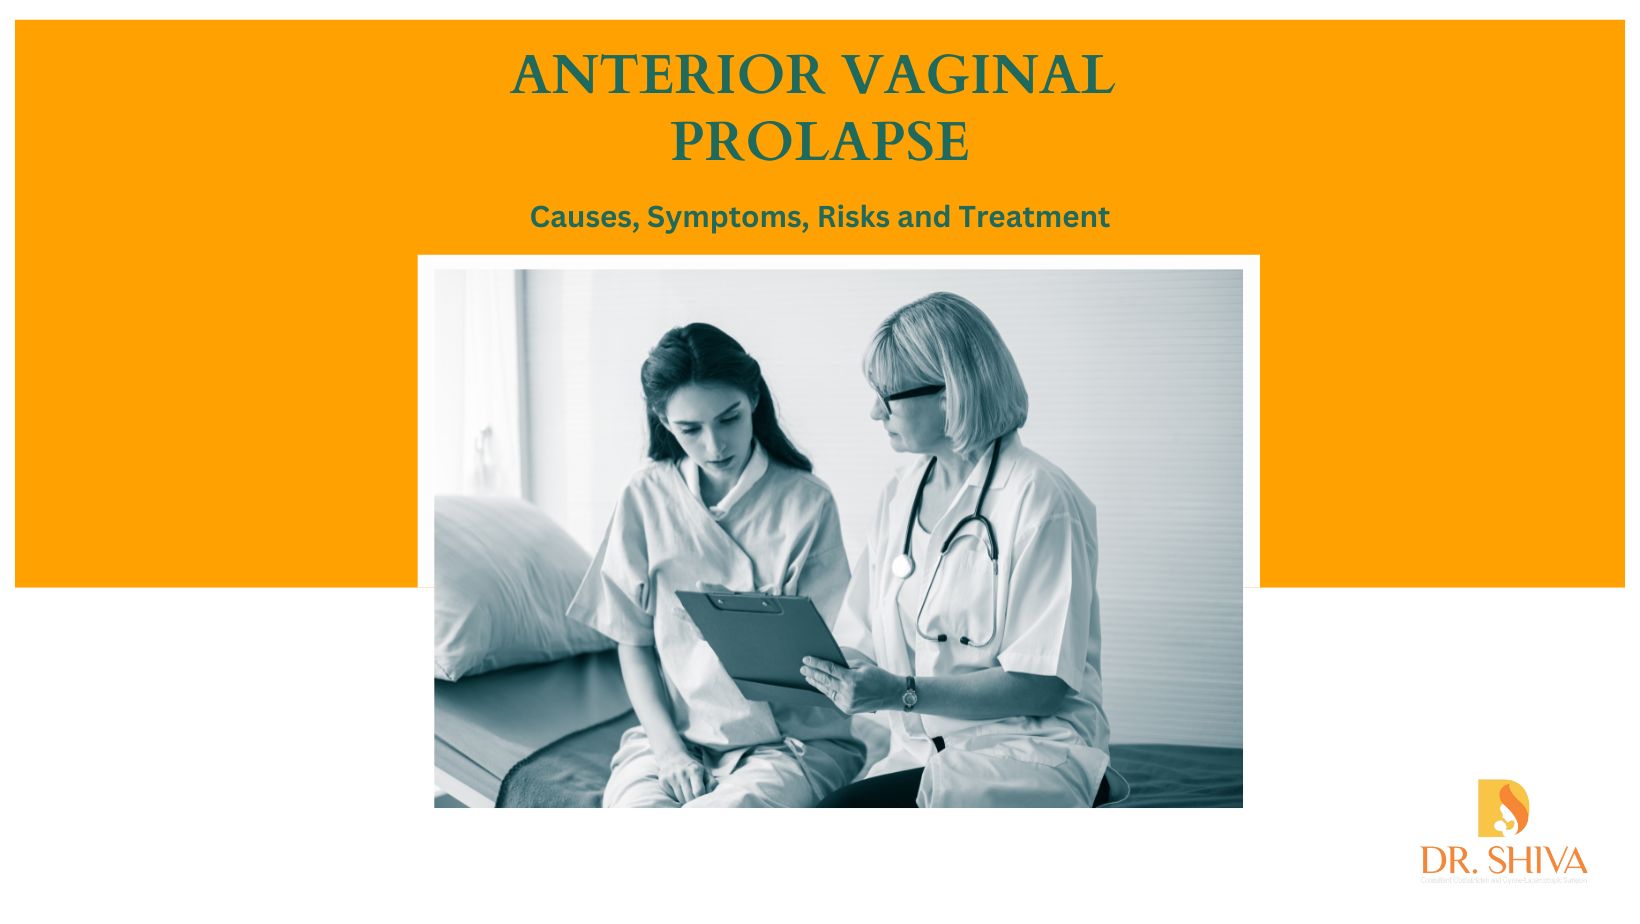 Anterior vaginal prolapse